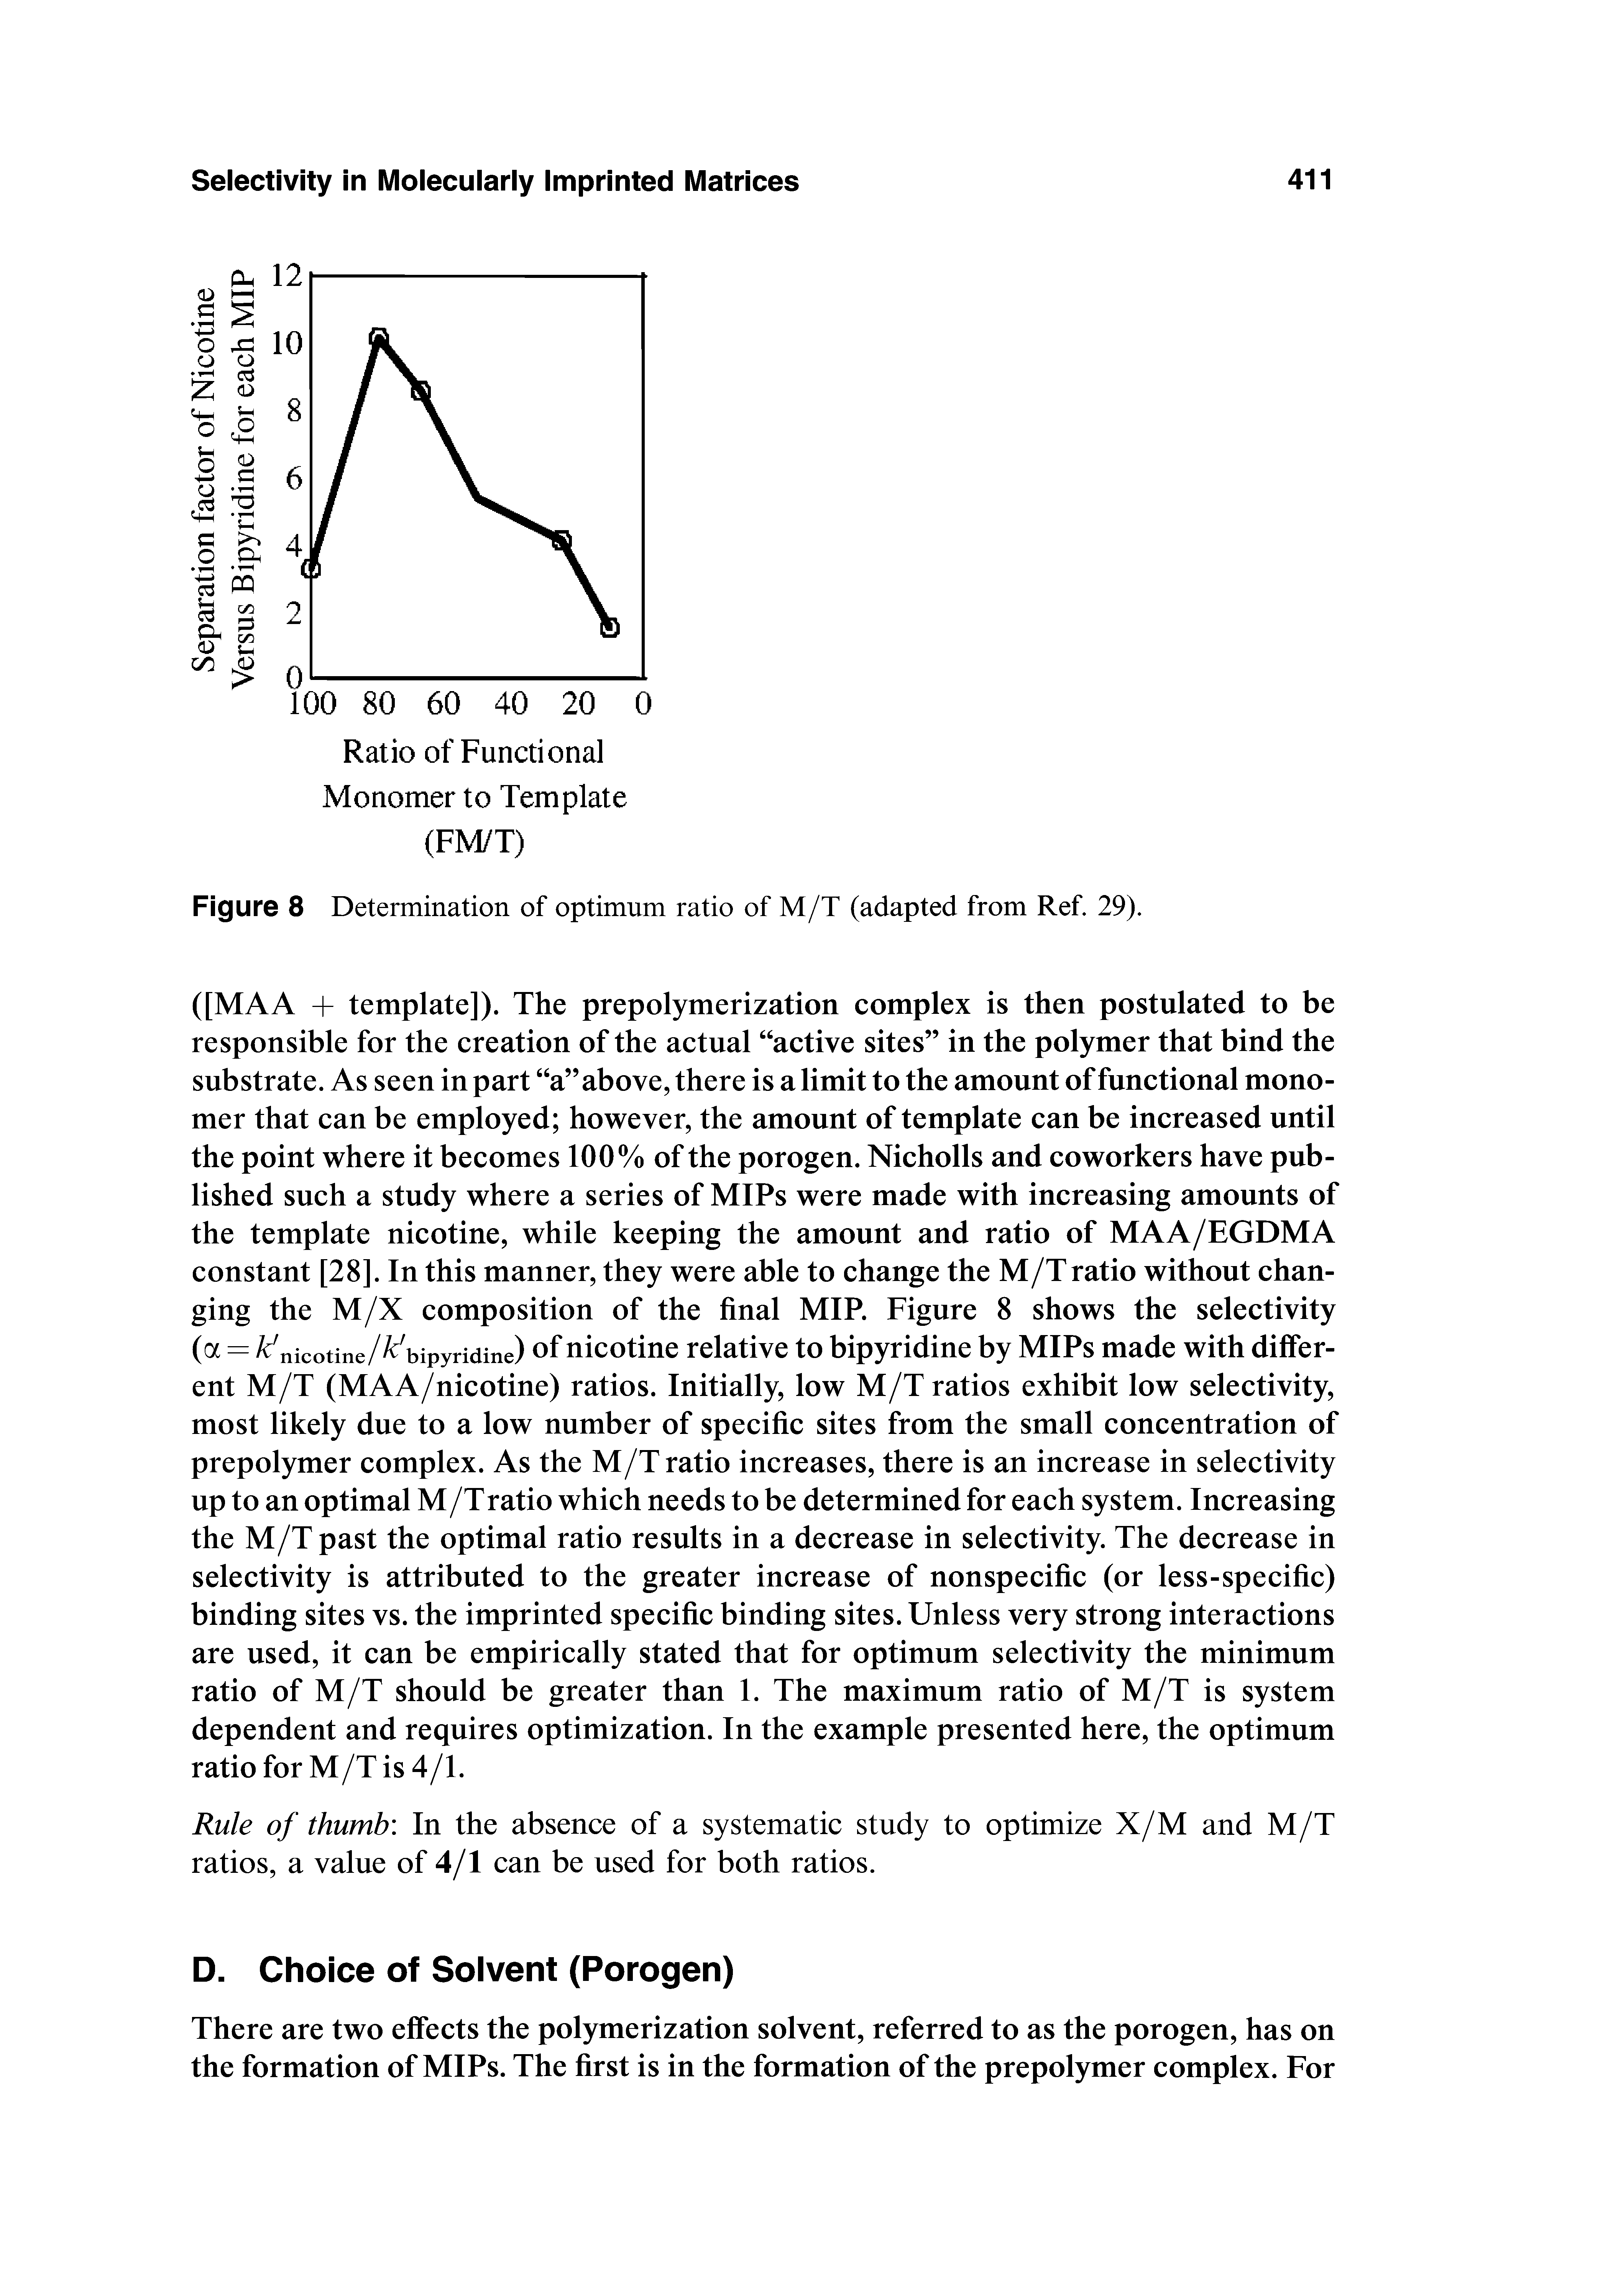 Figure 8 Determination of optimum ratio of M/T (adapted from Ref 29).